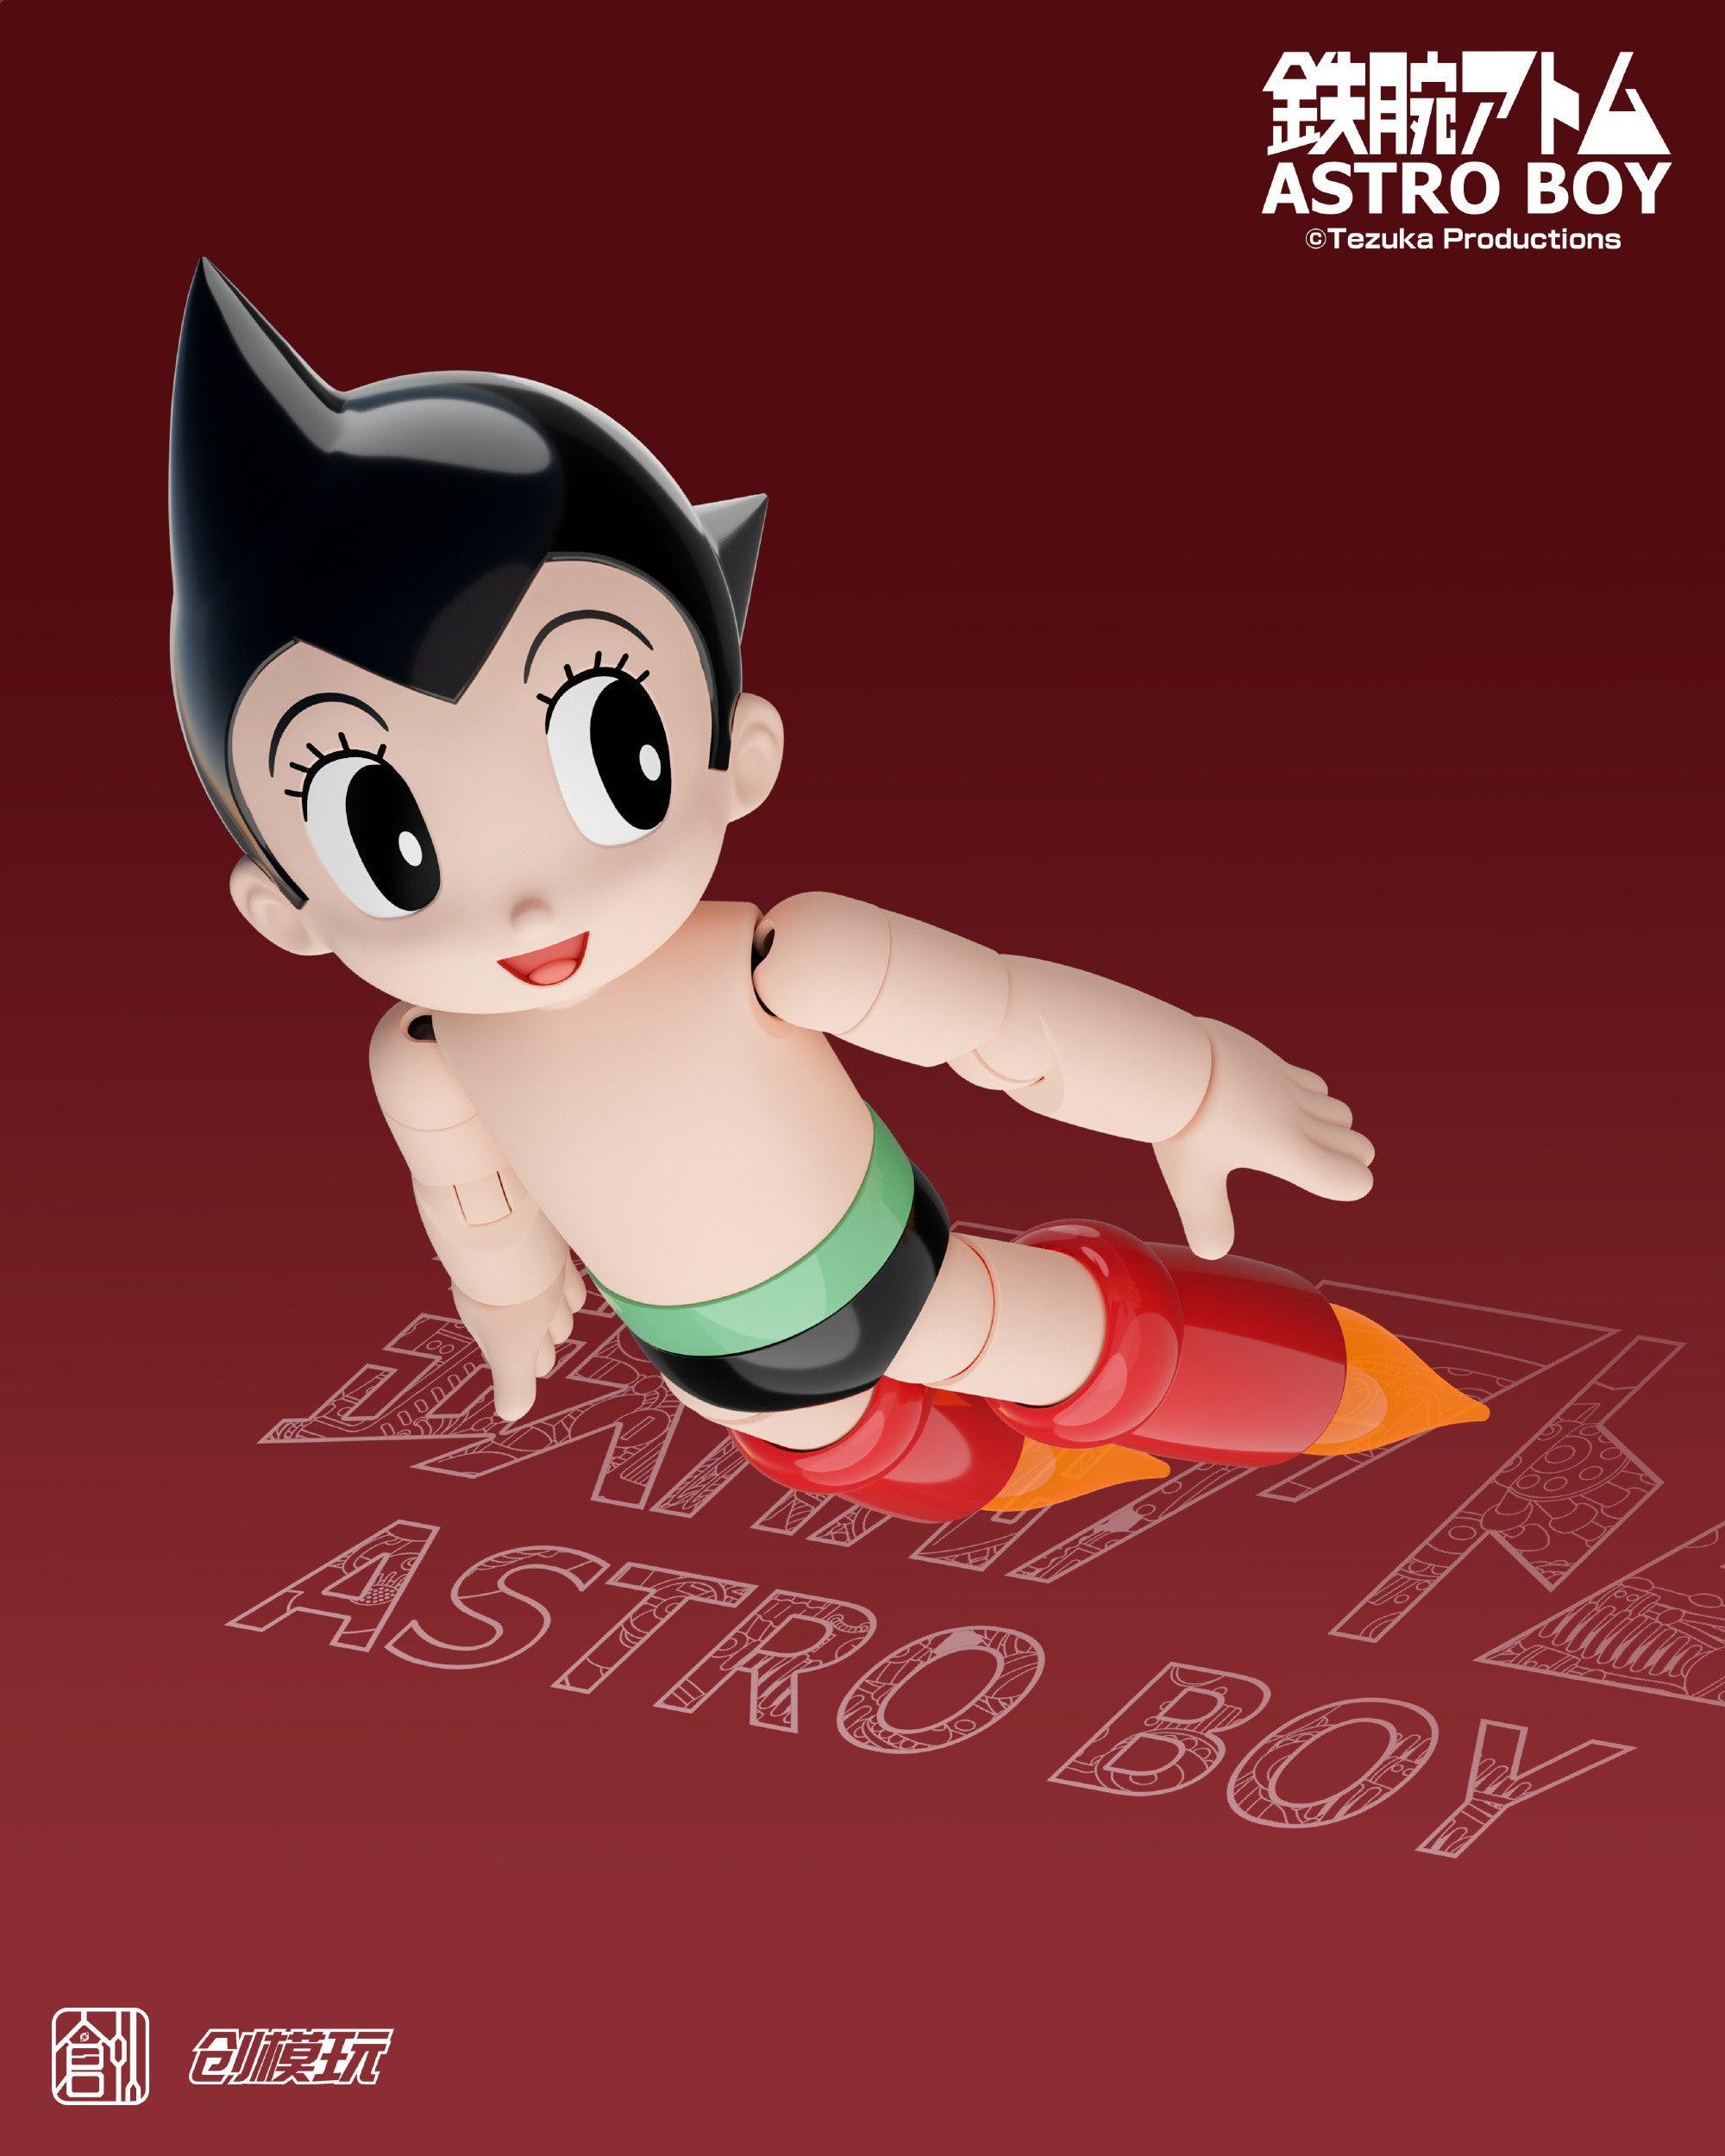 Tron Model - Astro Boy Model Kit